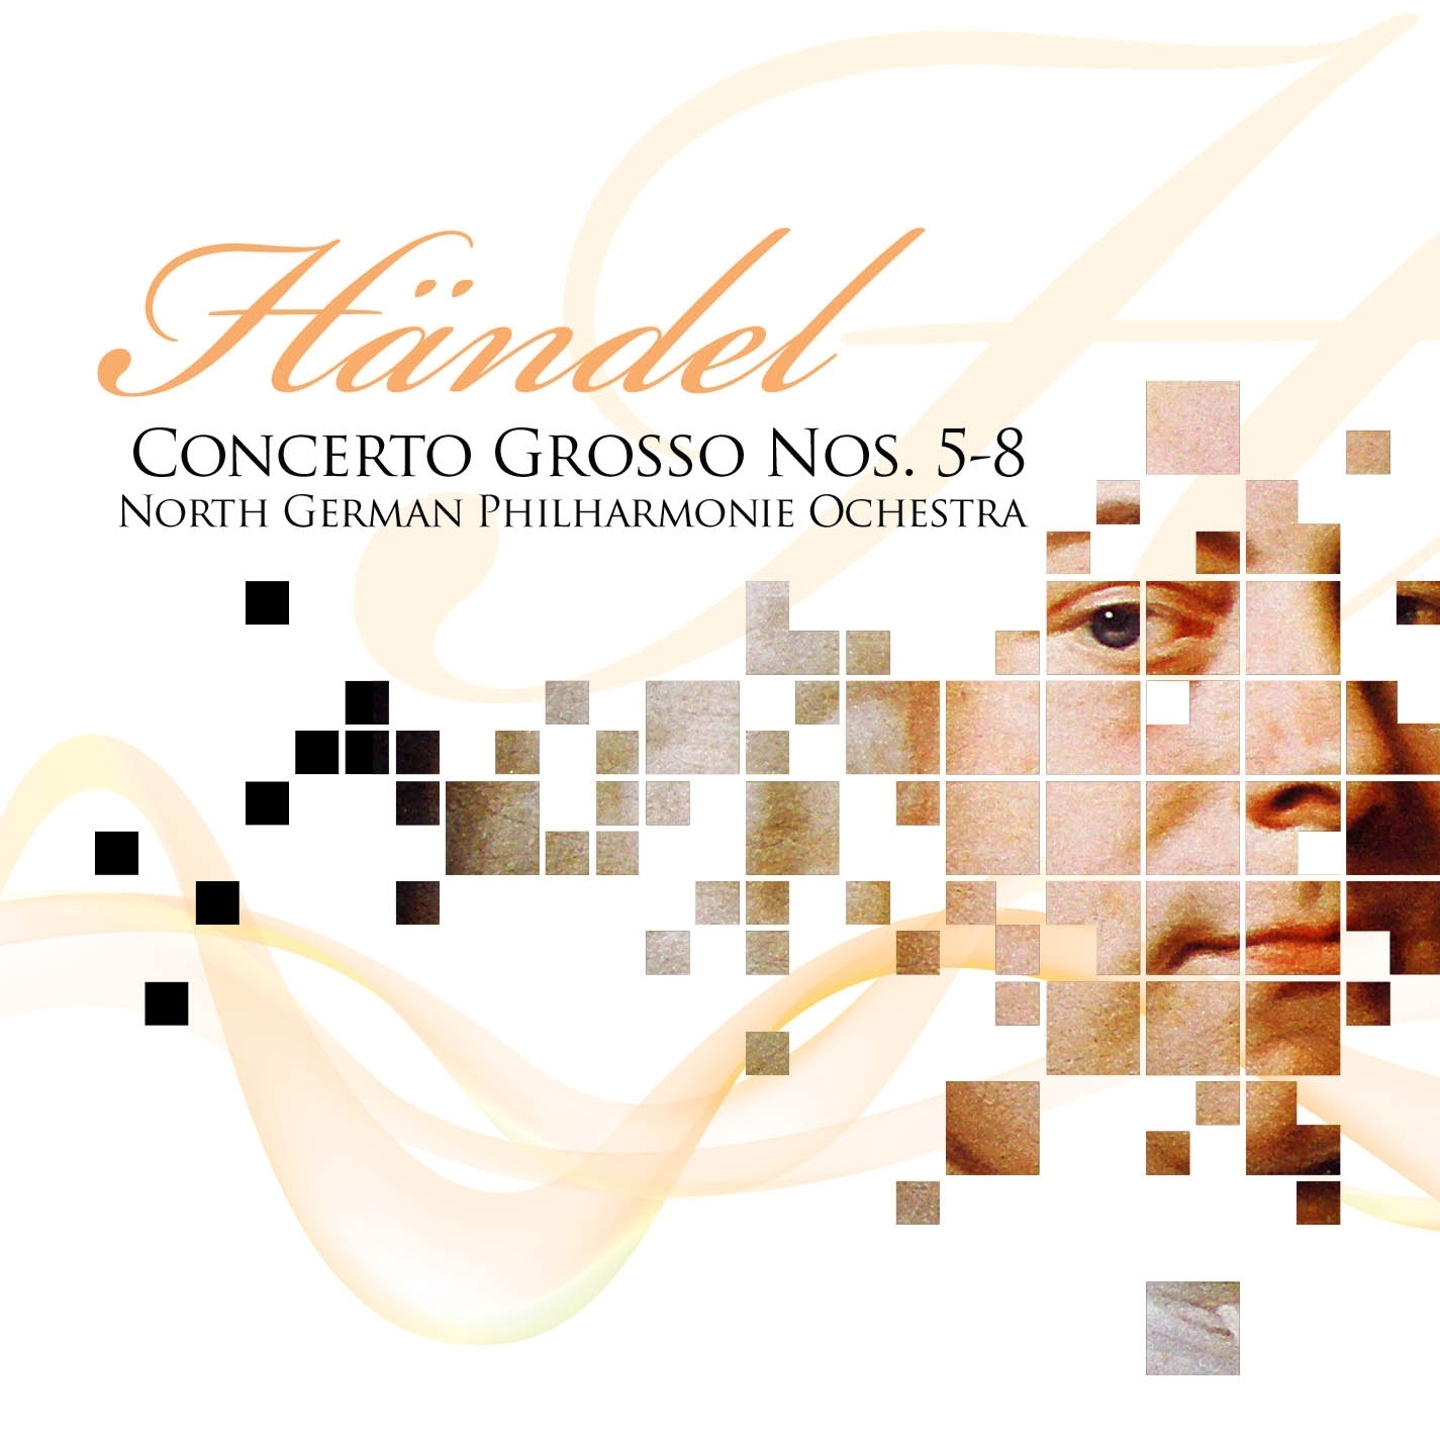 Concerto Grosso No. 5, in D Major, Op. 6 : Largehetto e staccato